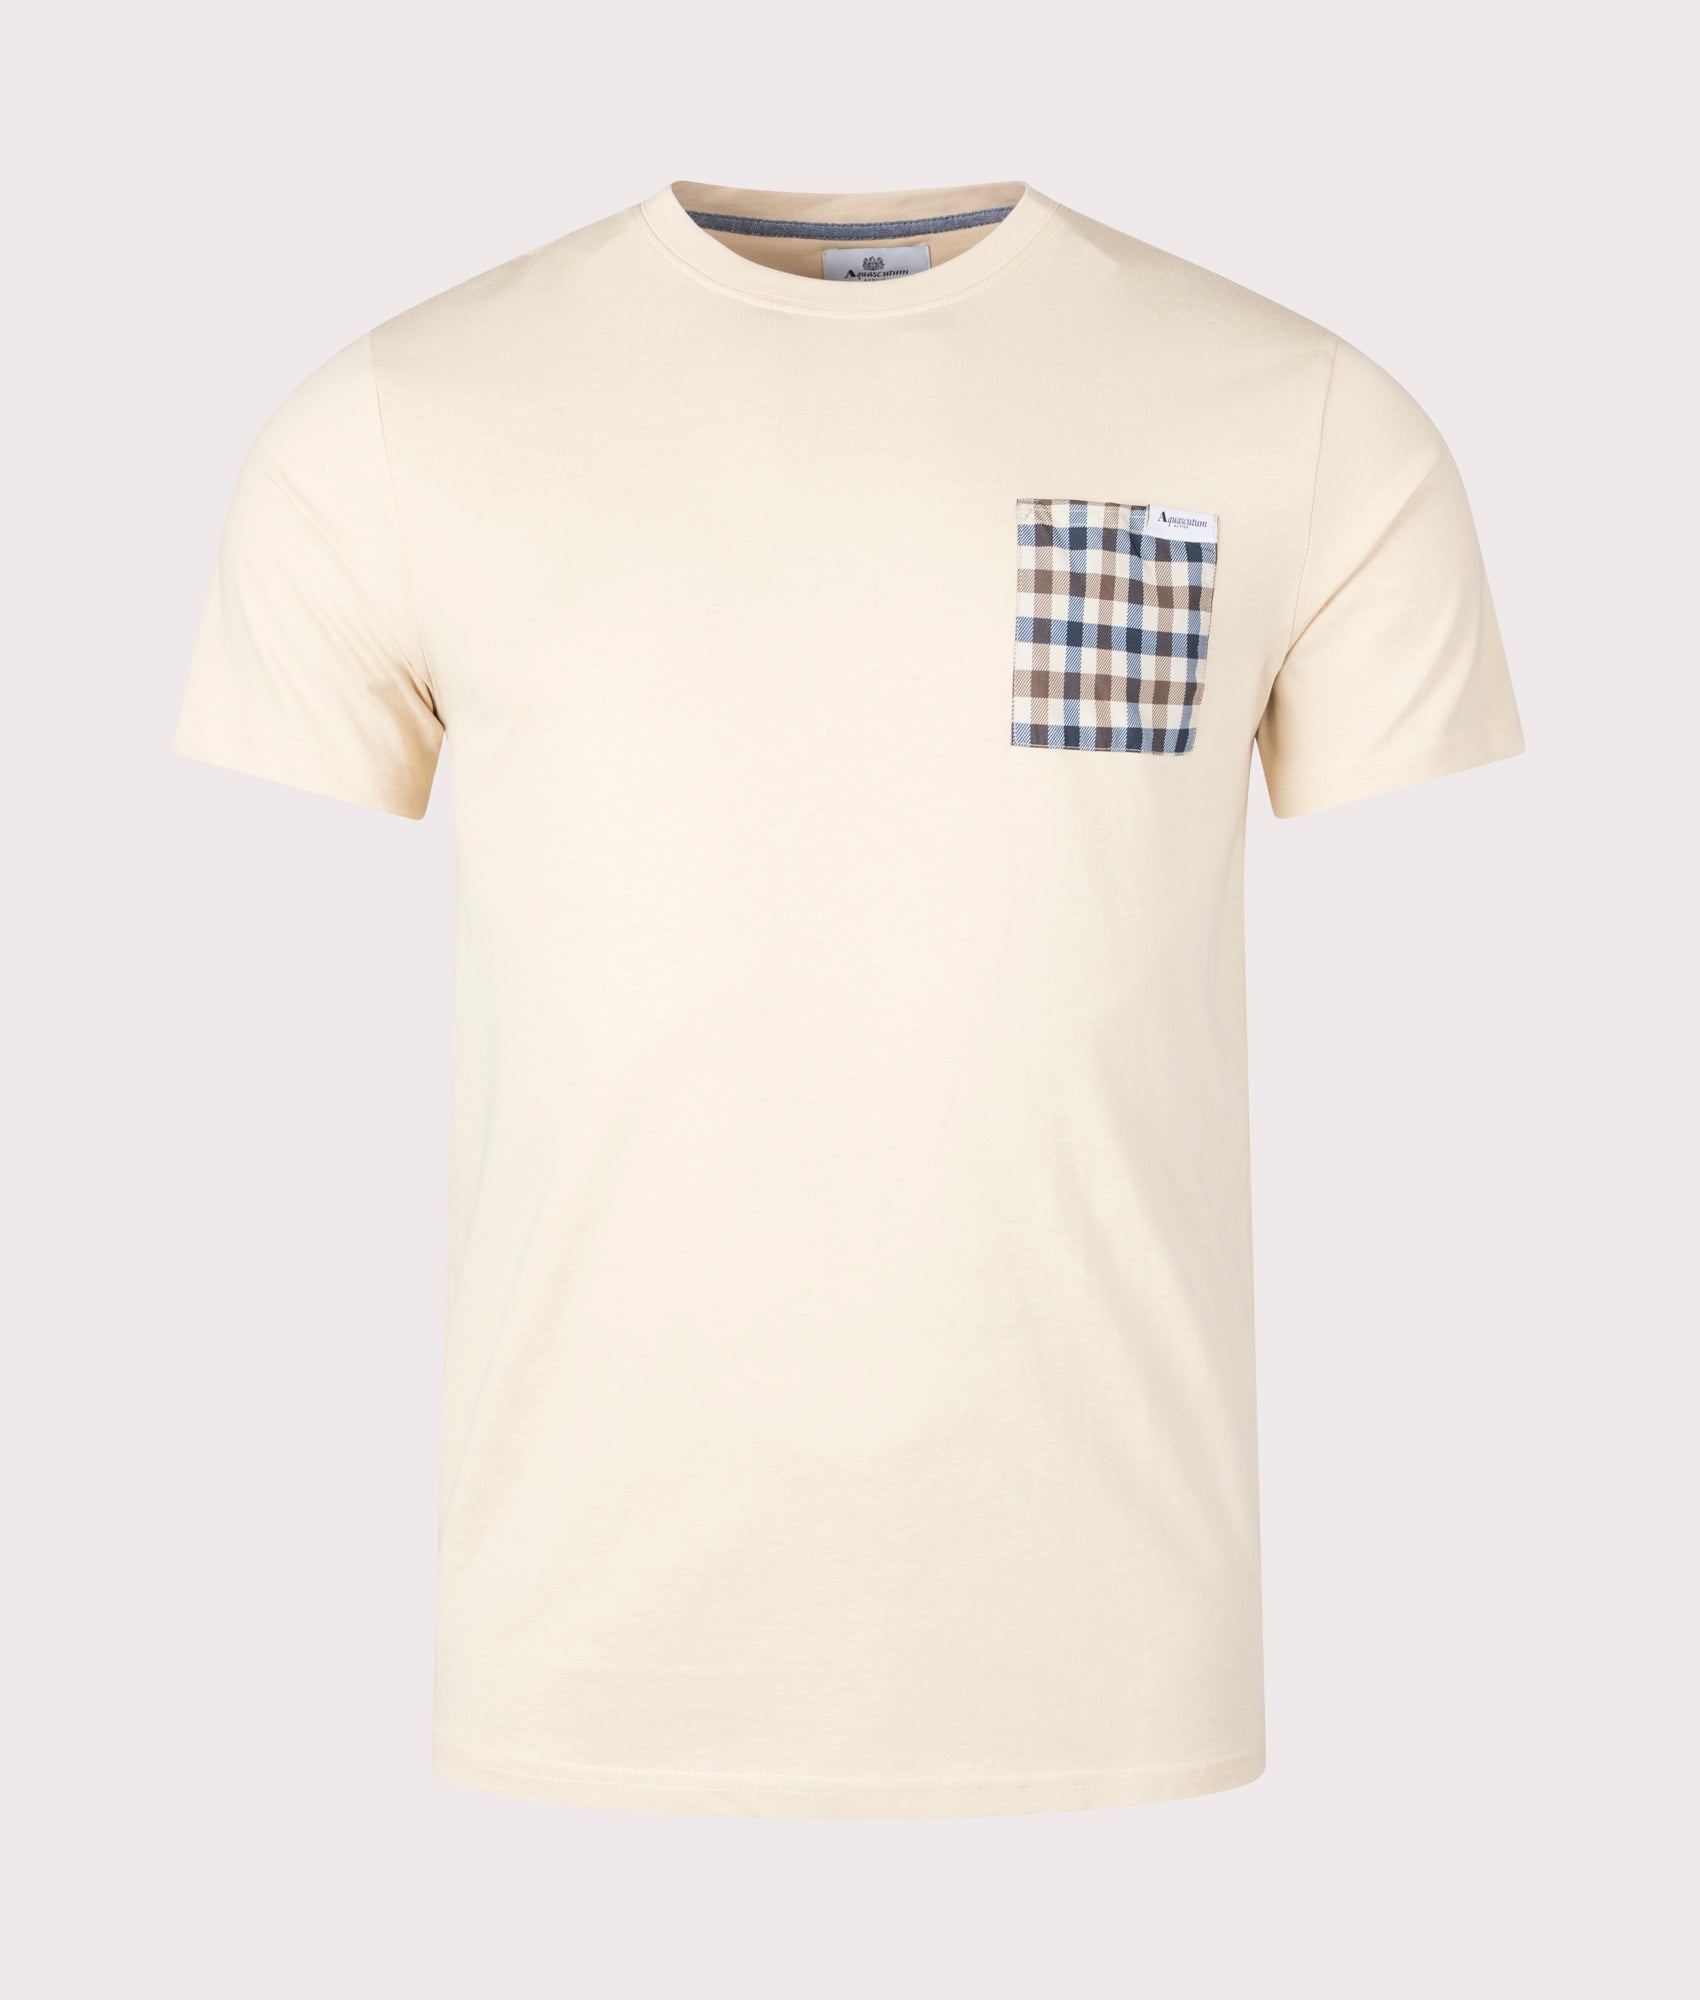 Aquascutum Mens Active Club Check Pocket T-Shirt - Colour: 03 Beige - Size: Large